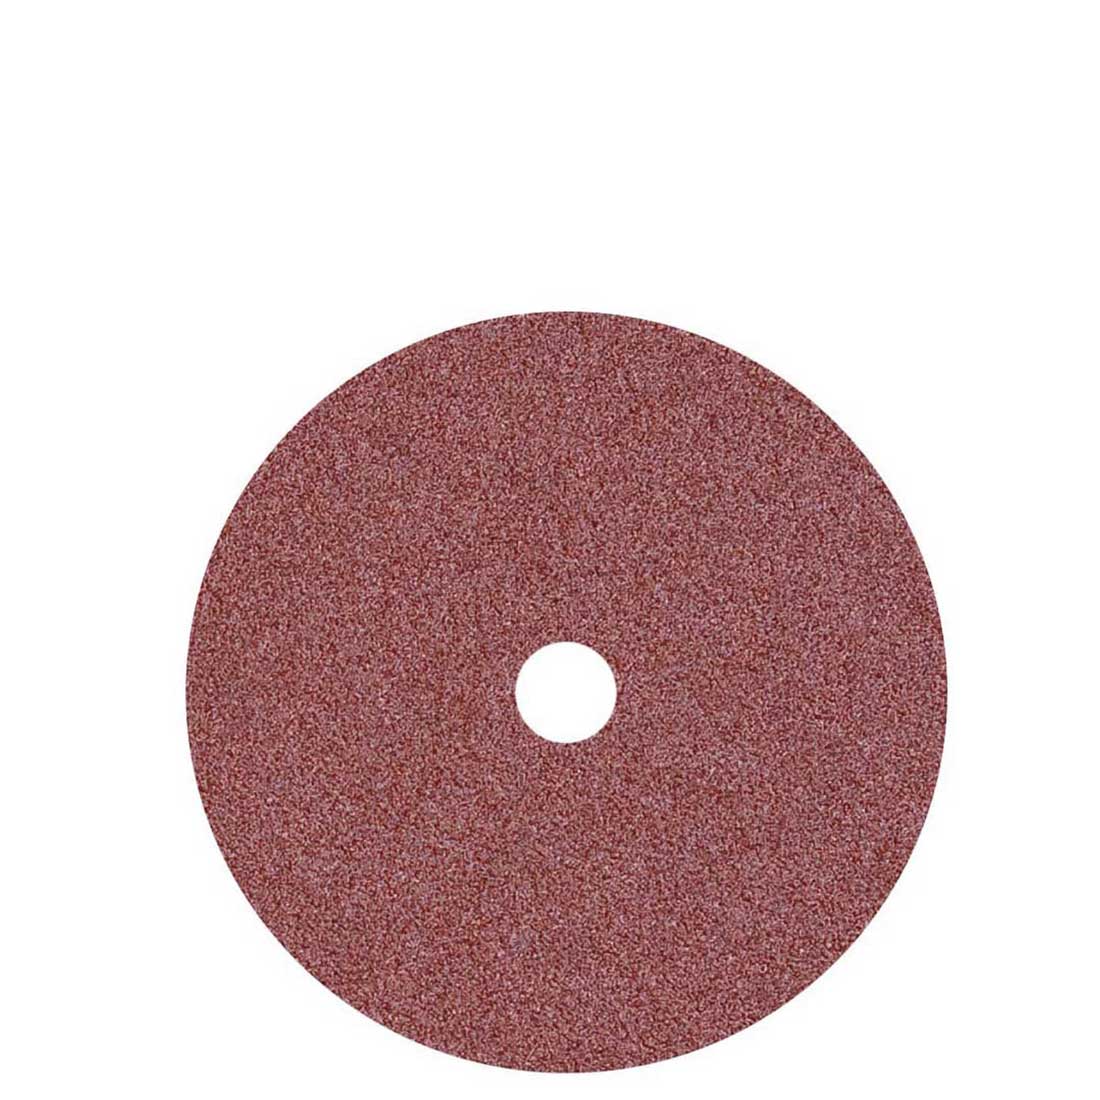 MioTools sanding discs for orbital floor sanders, G16–120, Ø 406 mm / doublesided / aluminium oxide